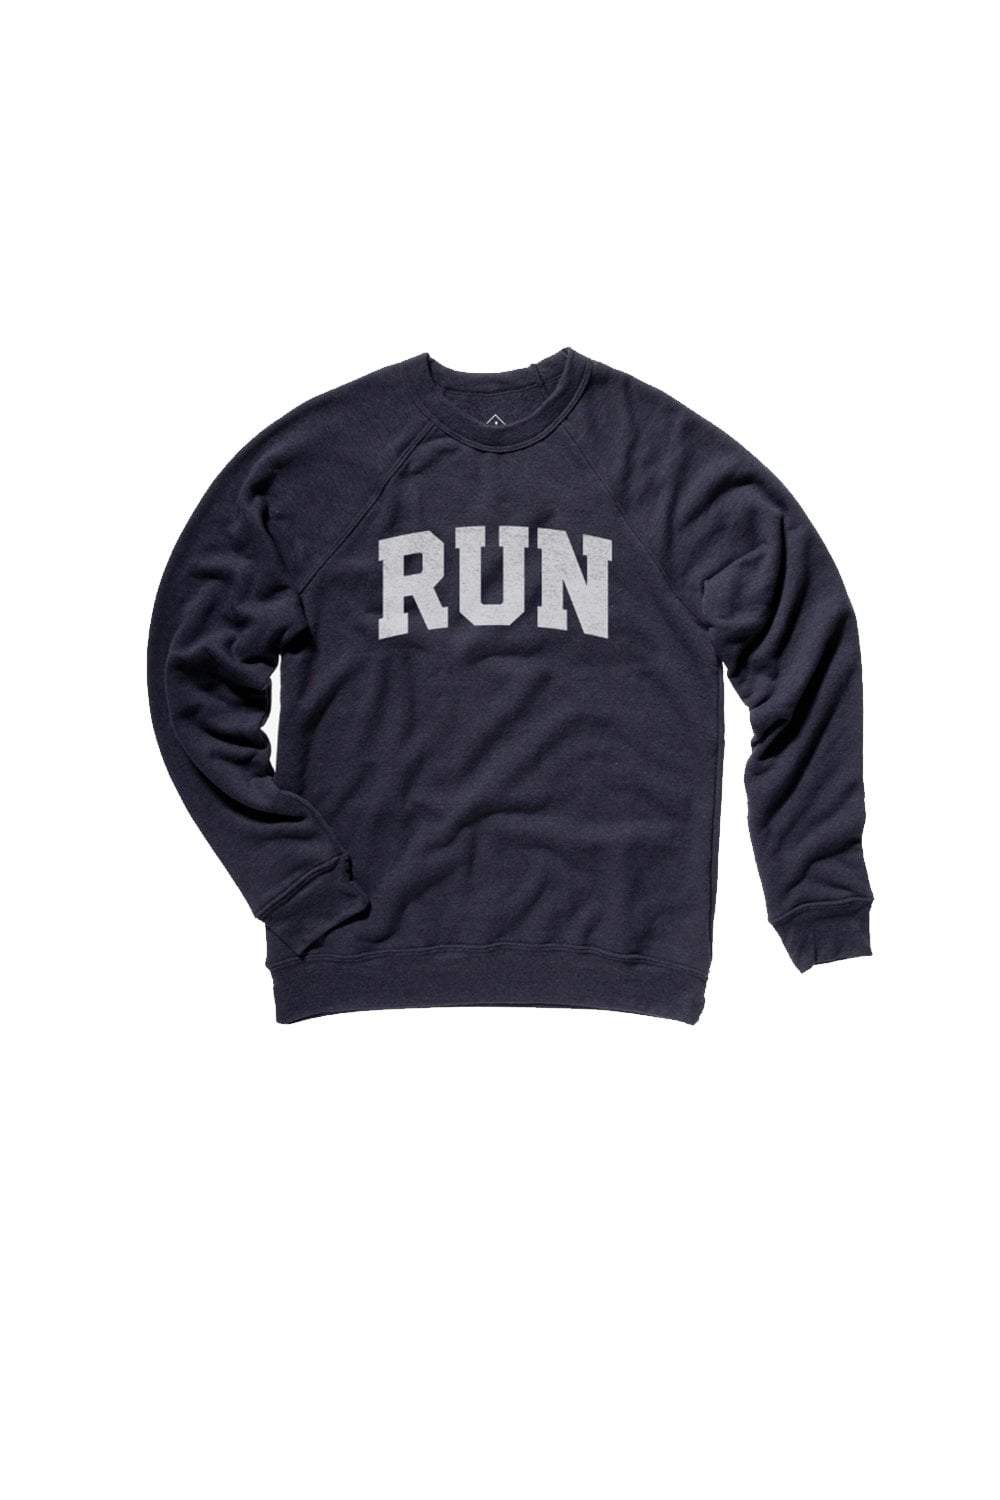 Sarah Marie Design Studio Sweatshirt XSmall / Navy RUN Sweatshirt